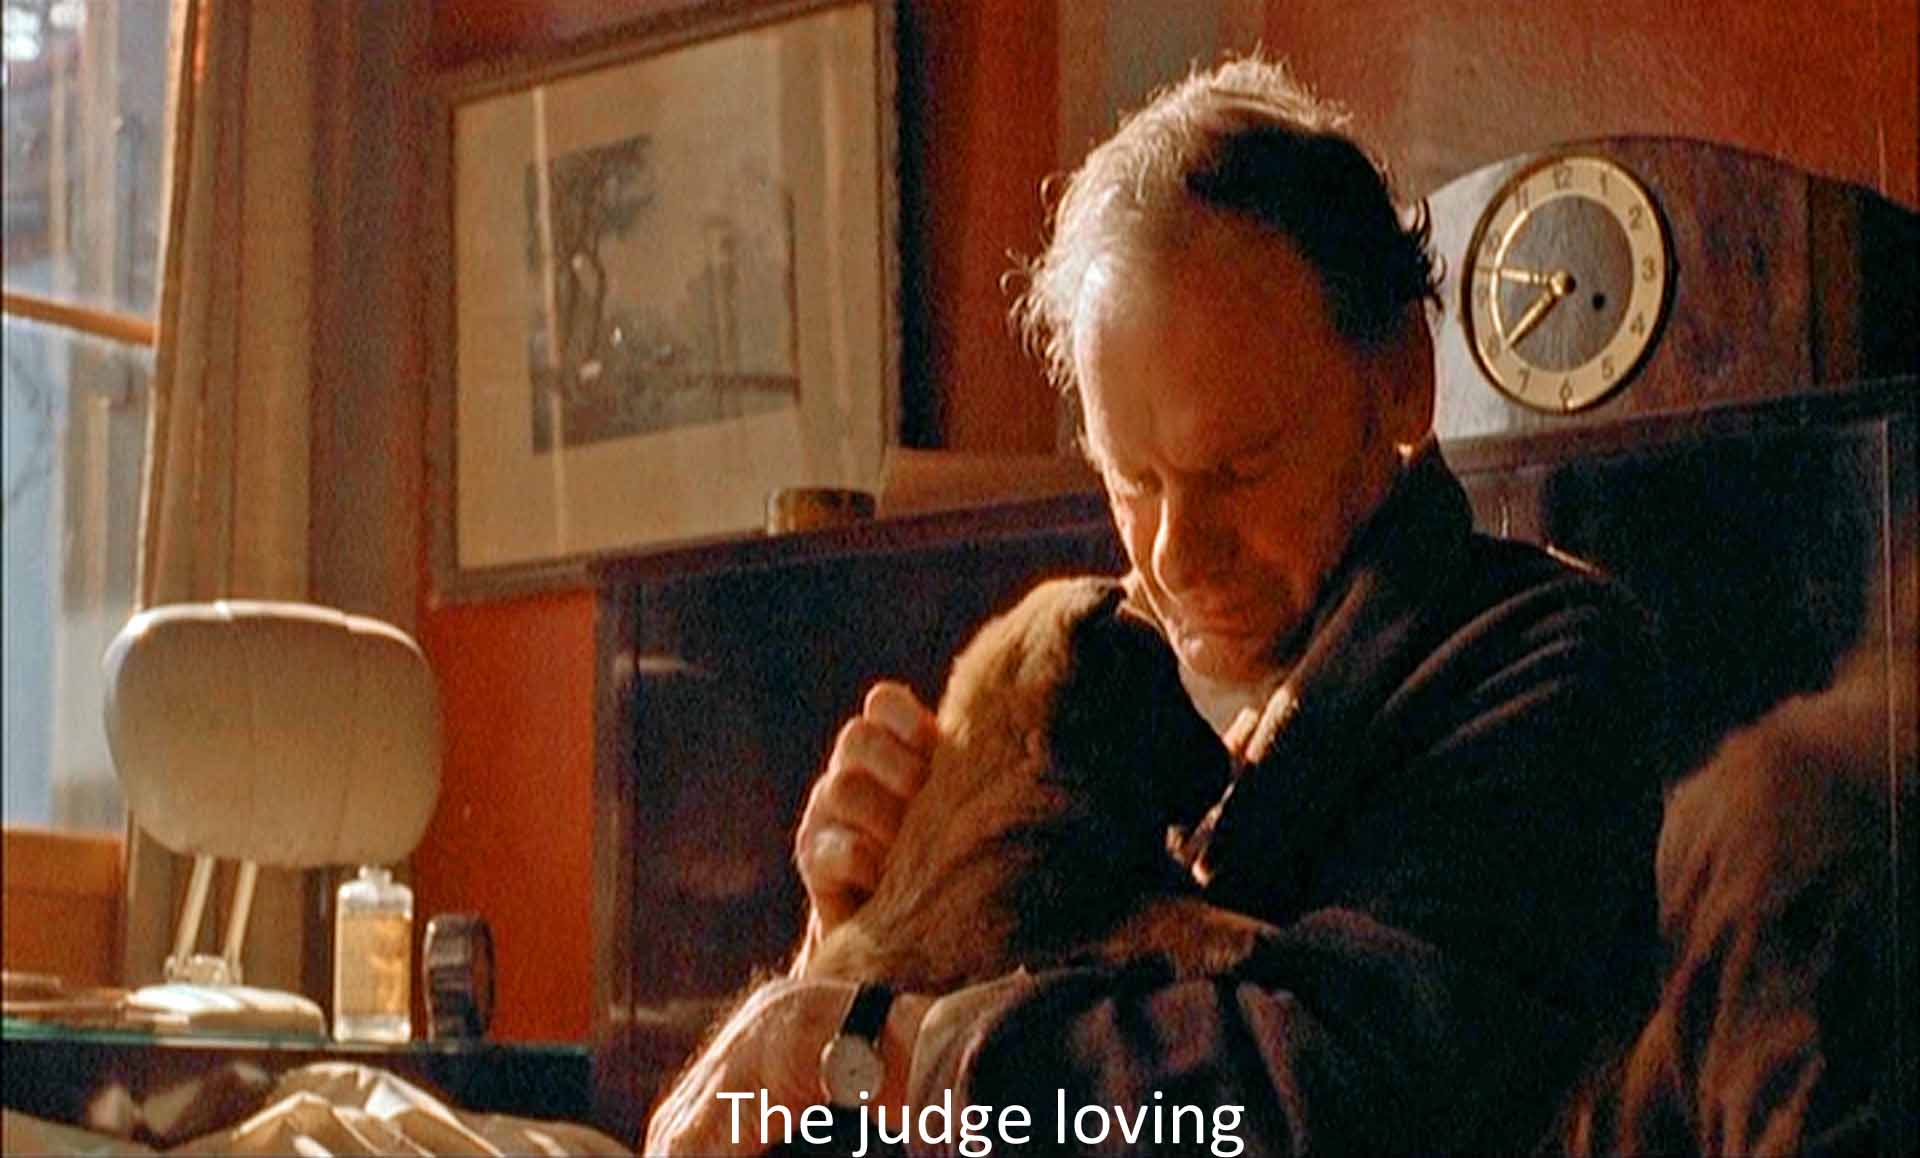 The judge loving